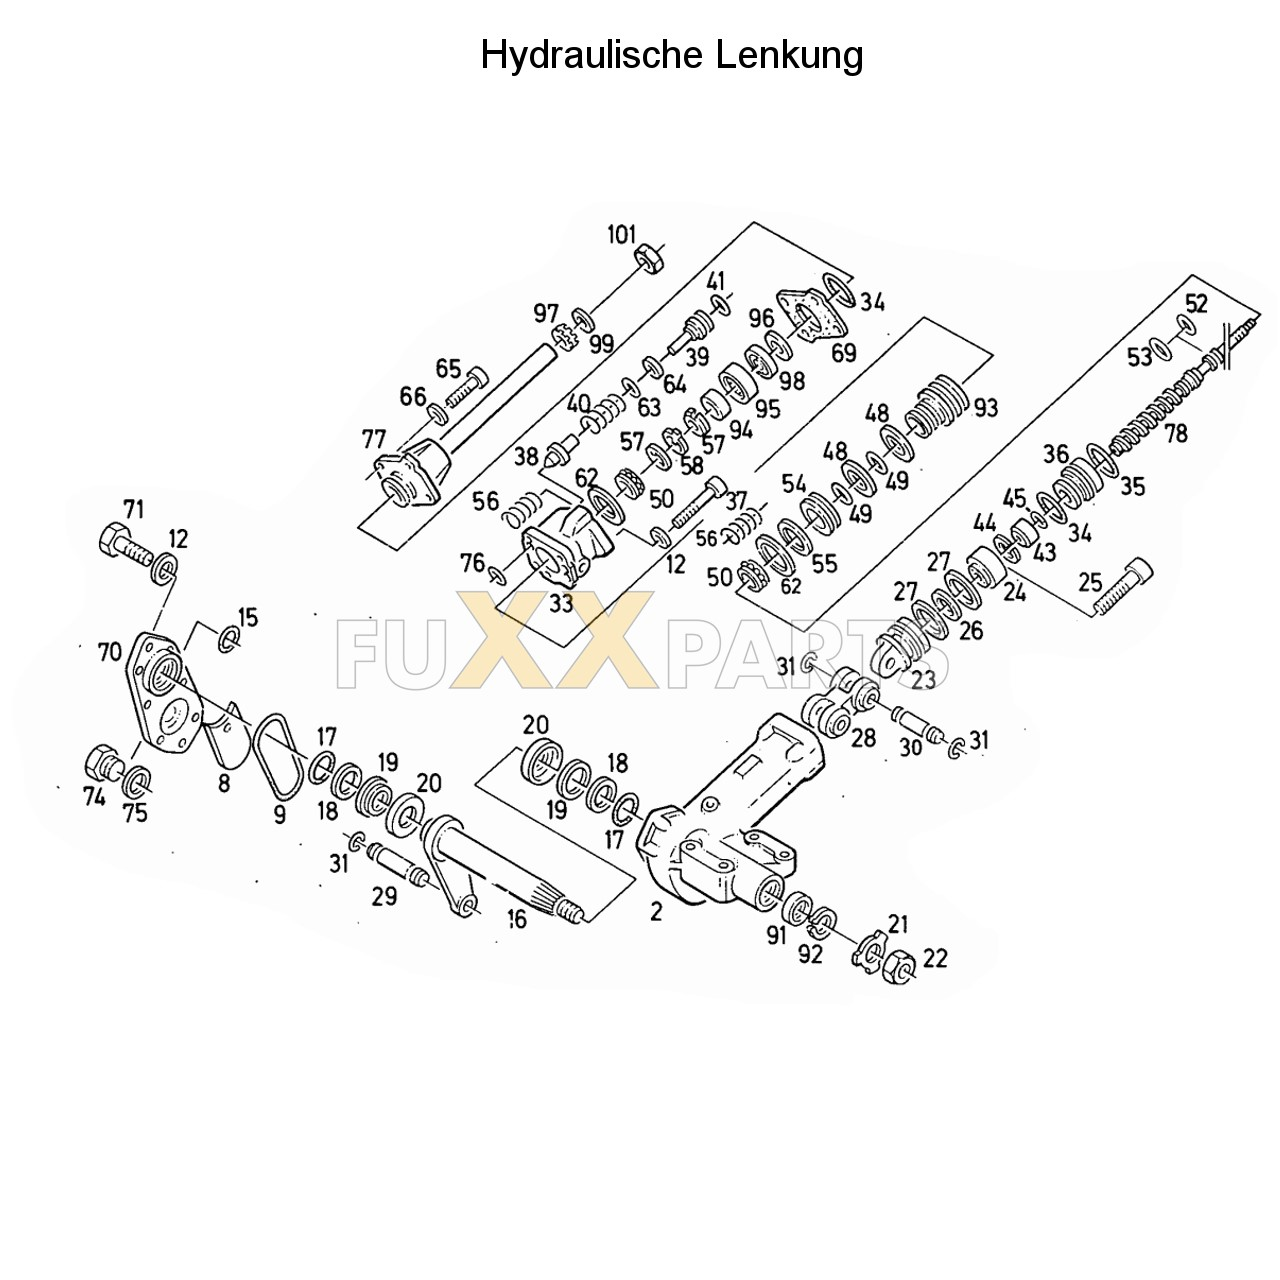 D 5206 Hydraulische Lenkung